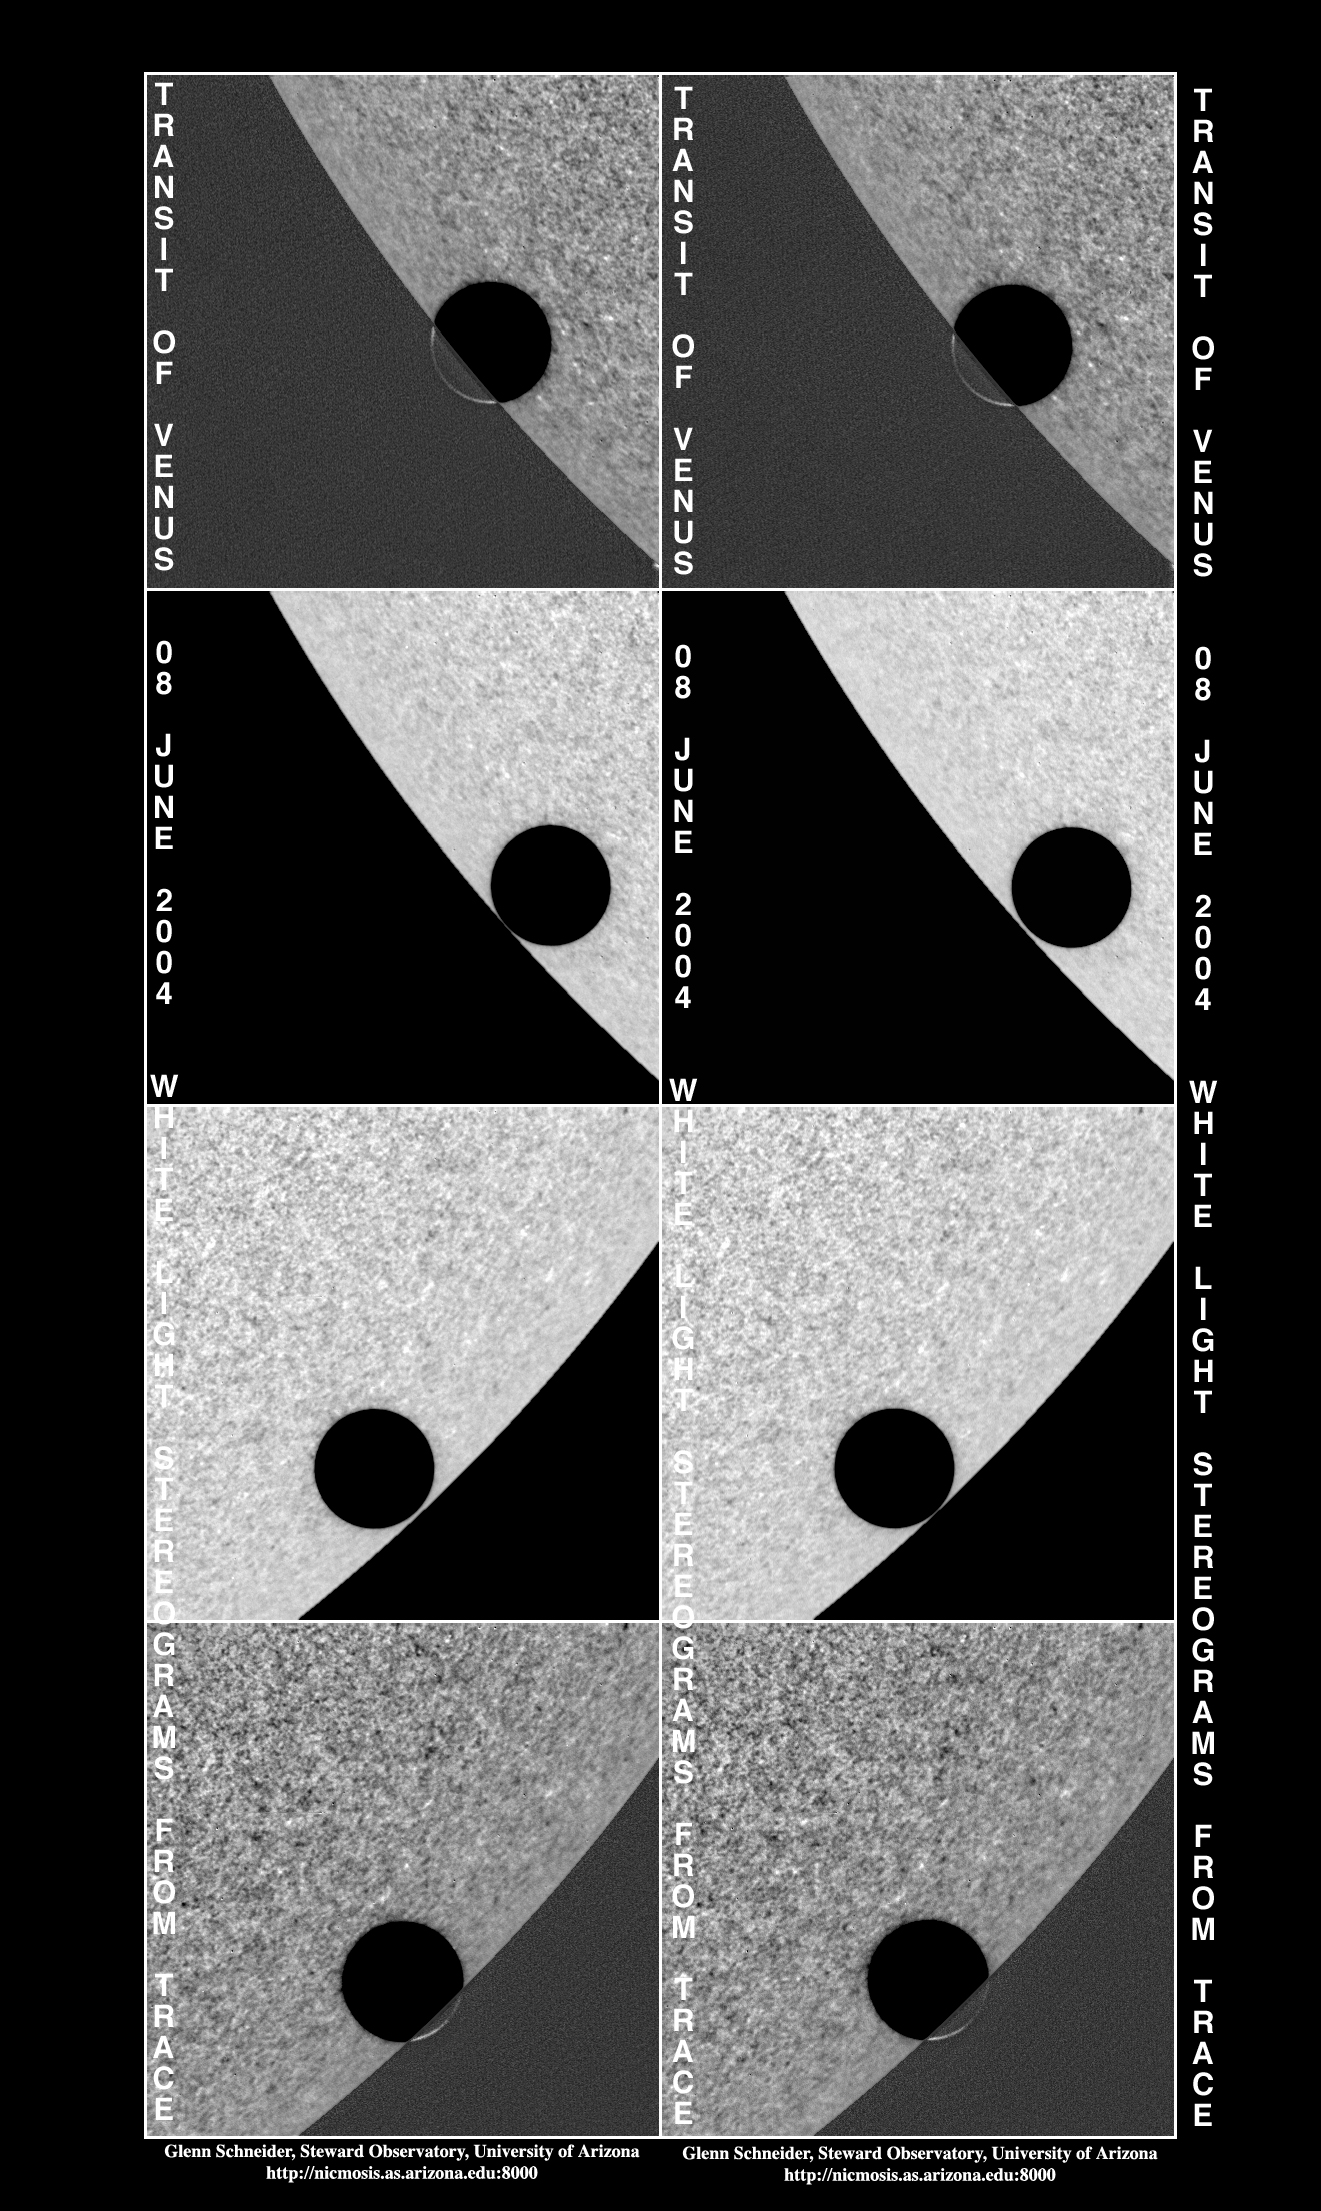 Transit of Venus Stereogram